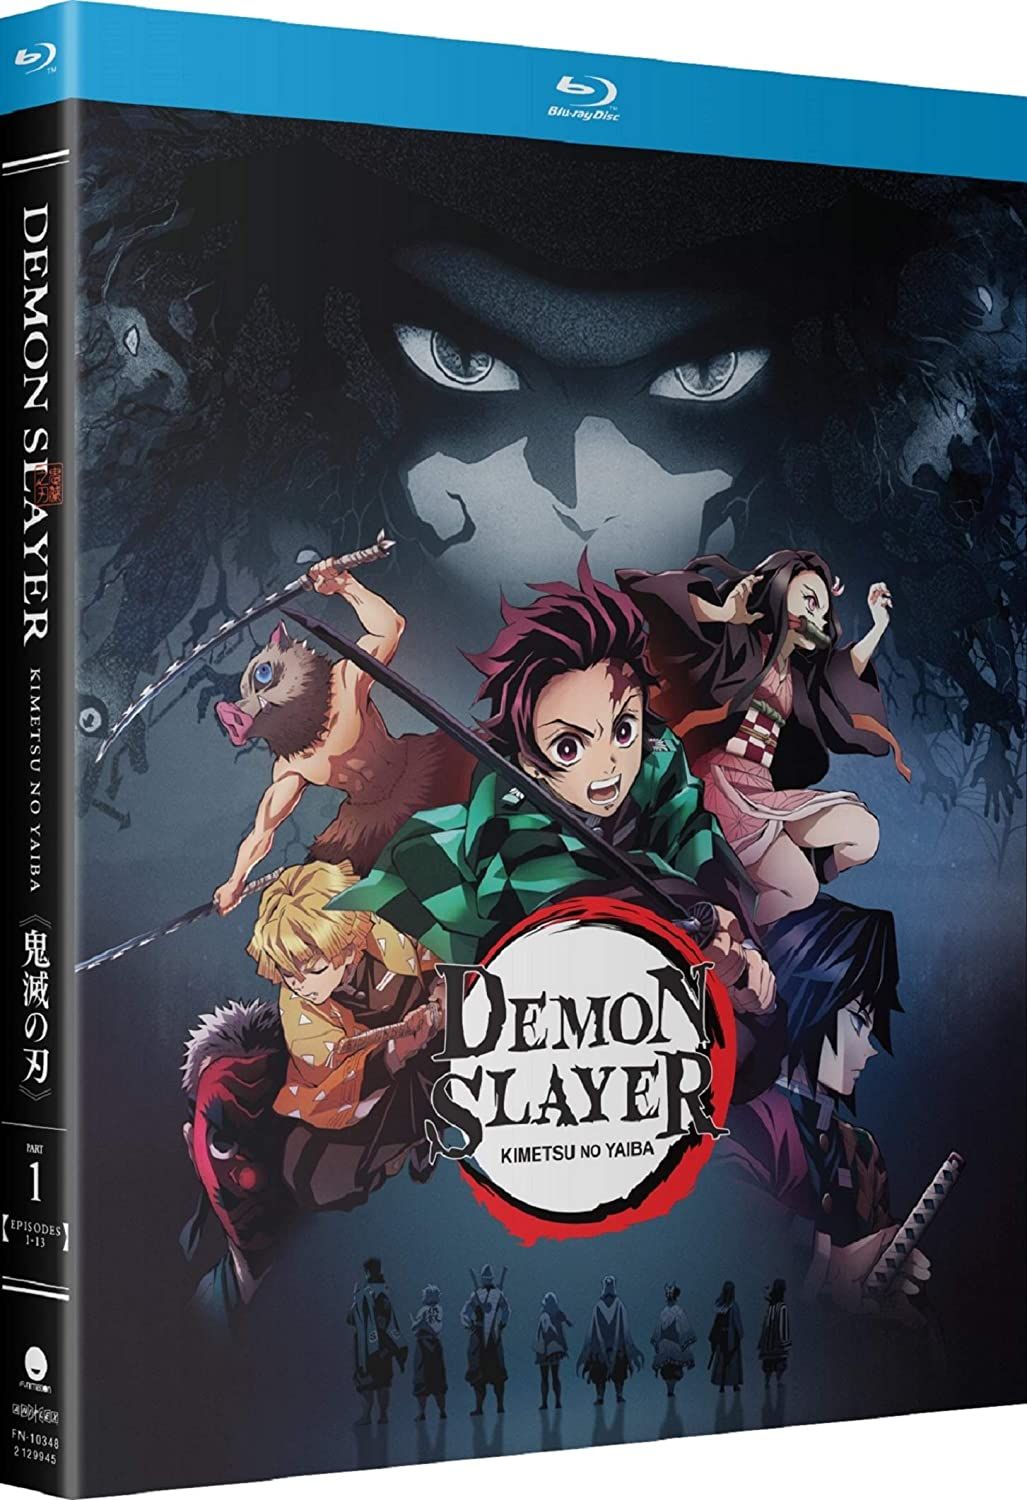 An image of a DVD case for Demon Slayer Kimetsu no Yaiba